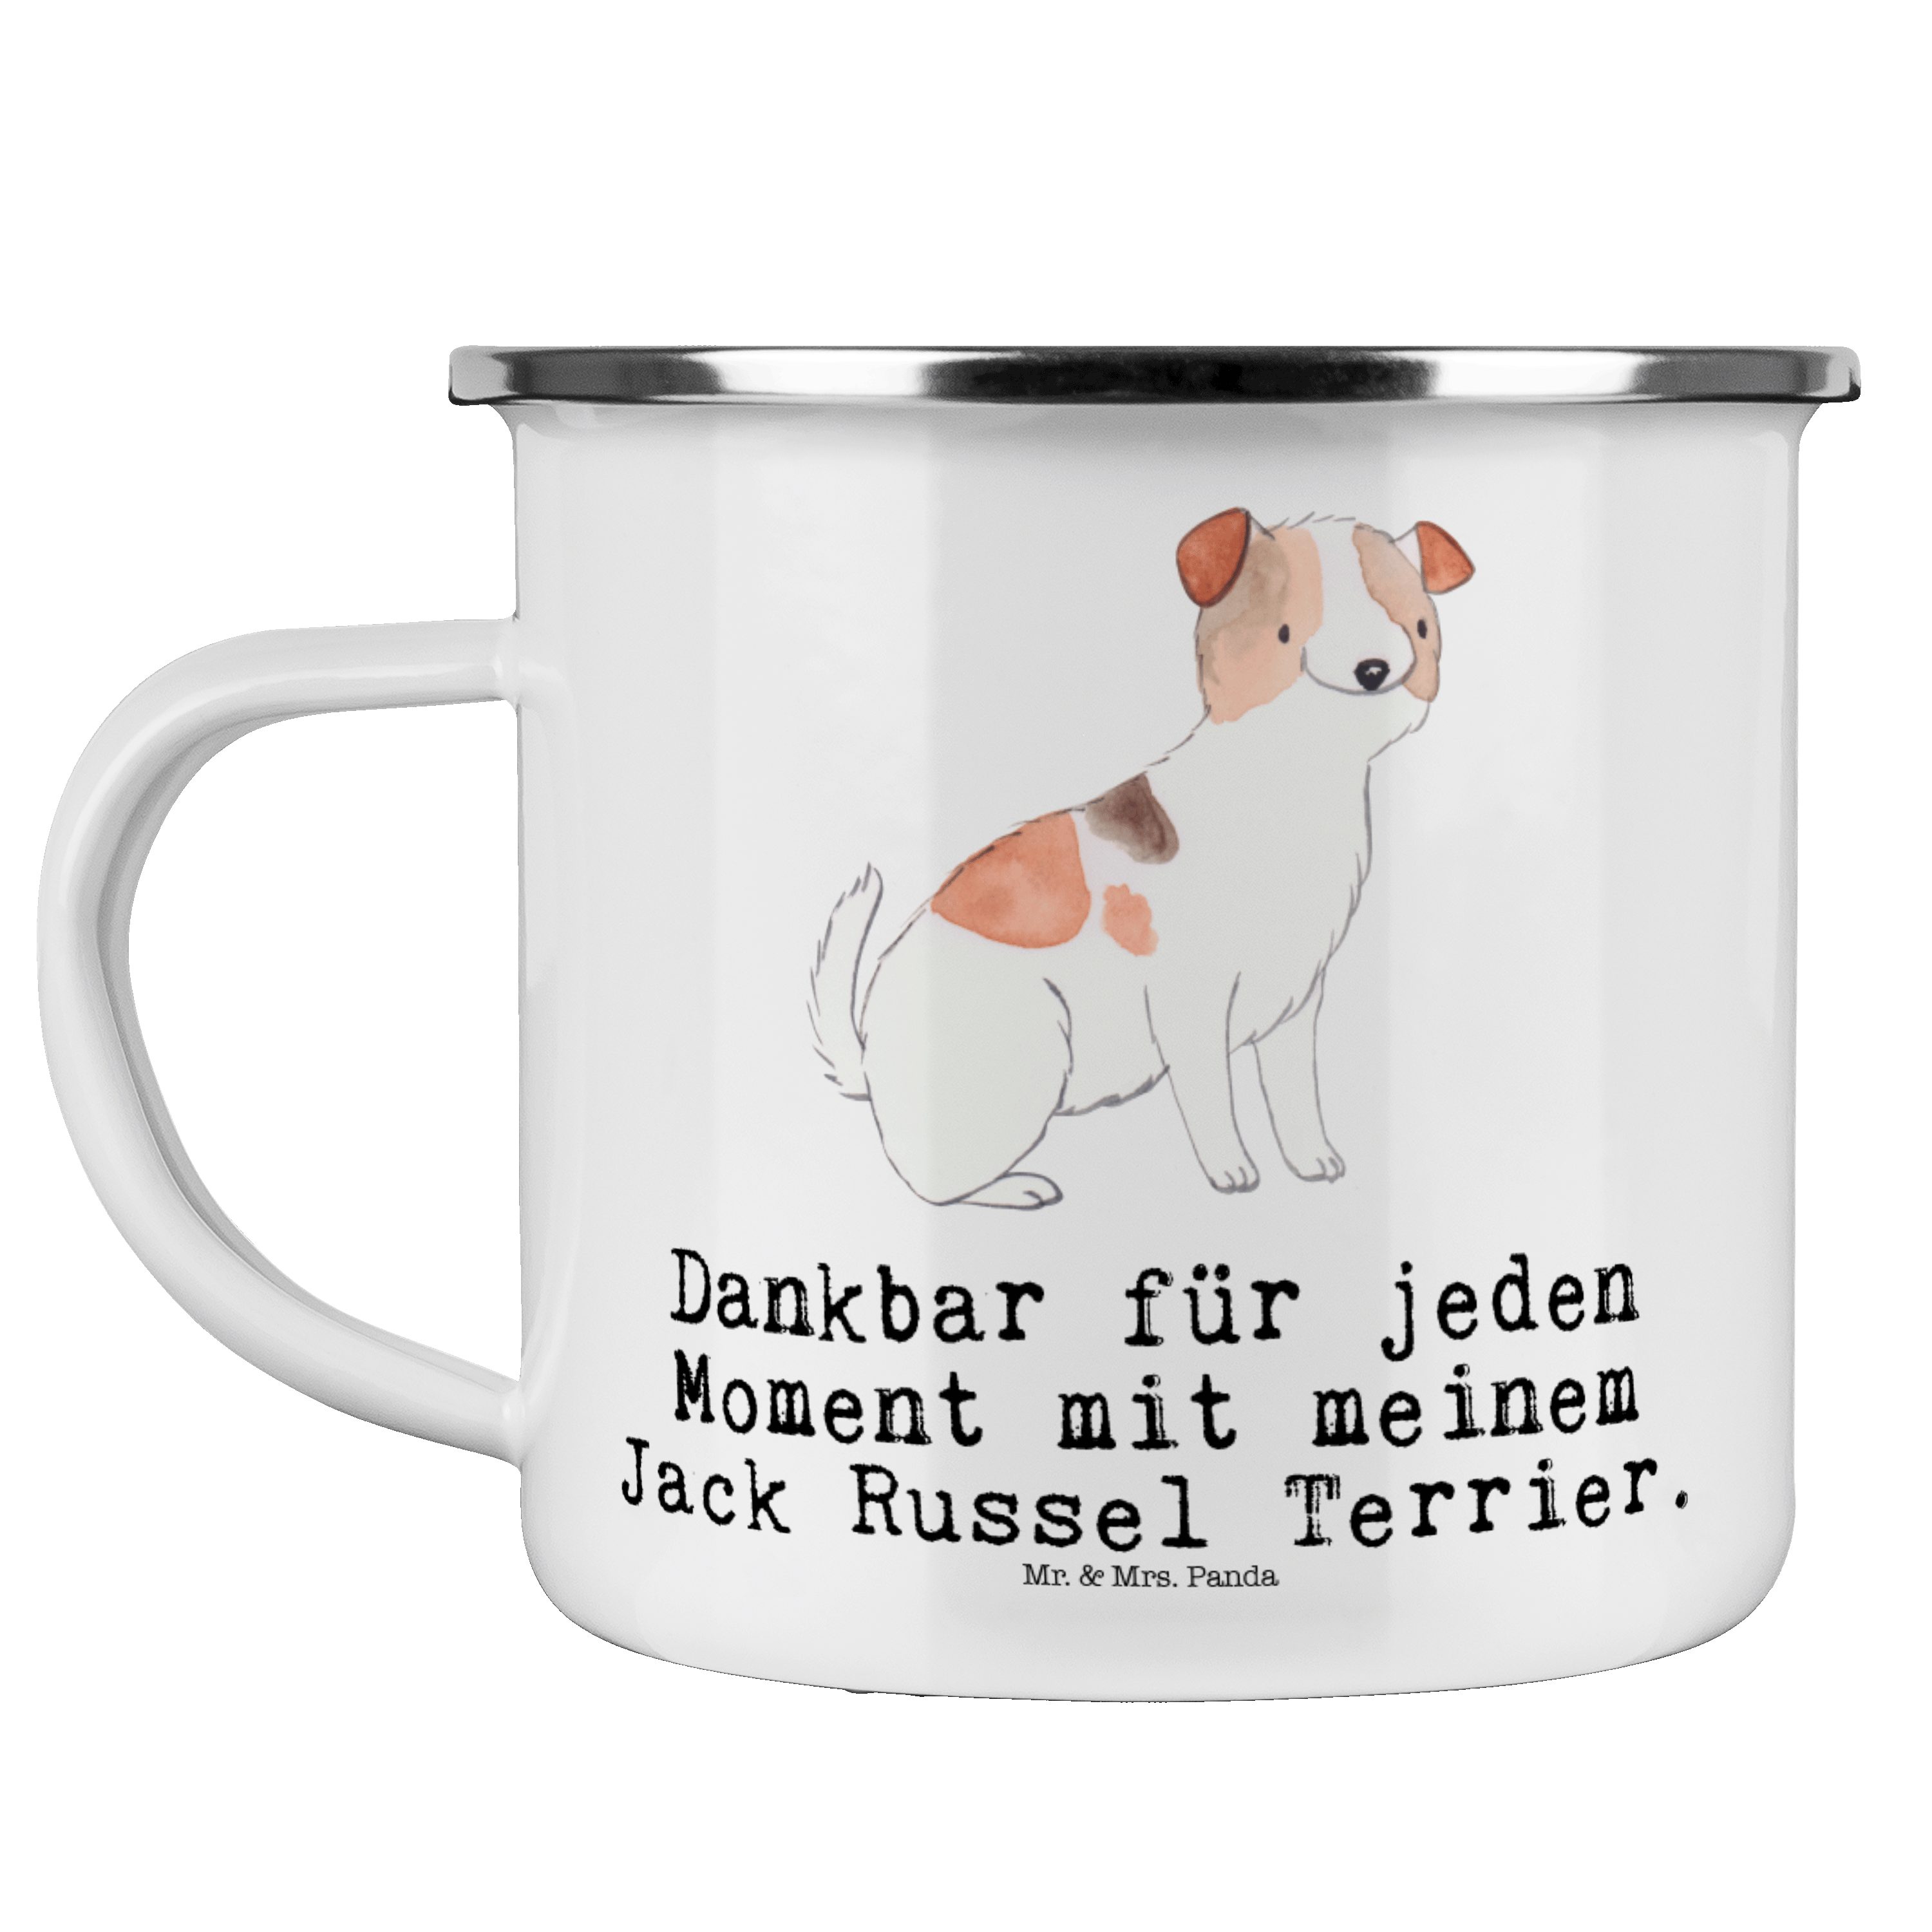 Mr. & Mrs. Panda Becher Jack Russell Terrier Moment - Weiß - Geschenk, Metalltasse für Campin, Emaille